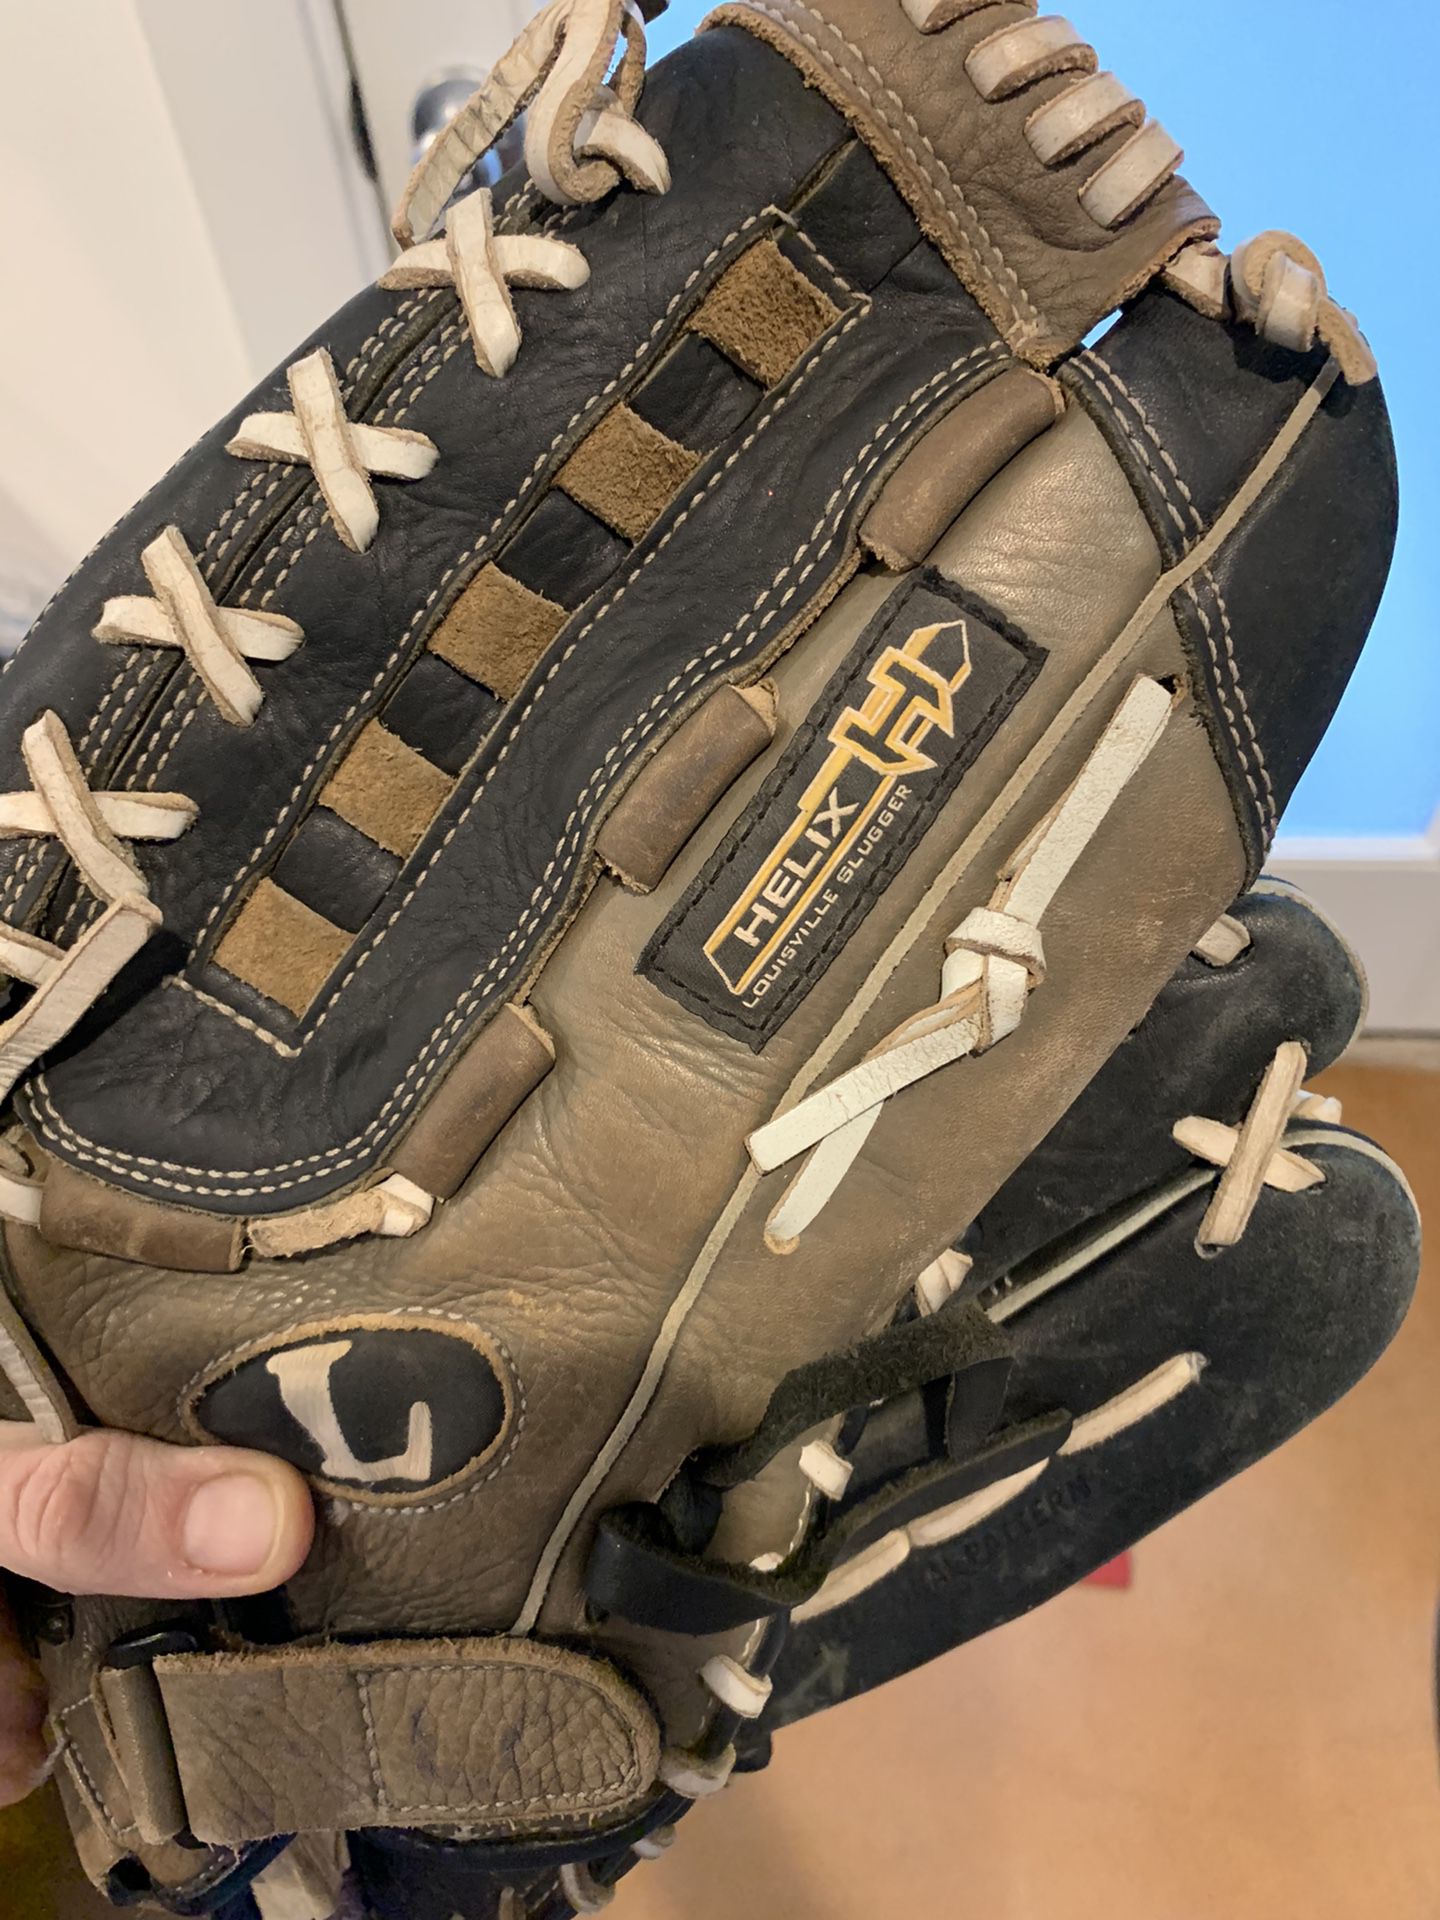 Helix softball baseball glove 14